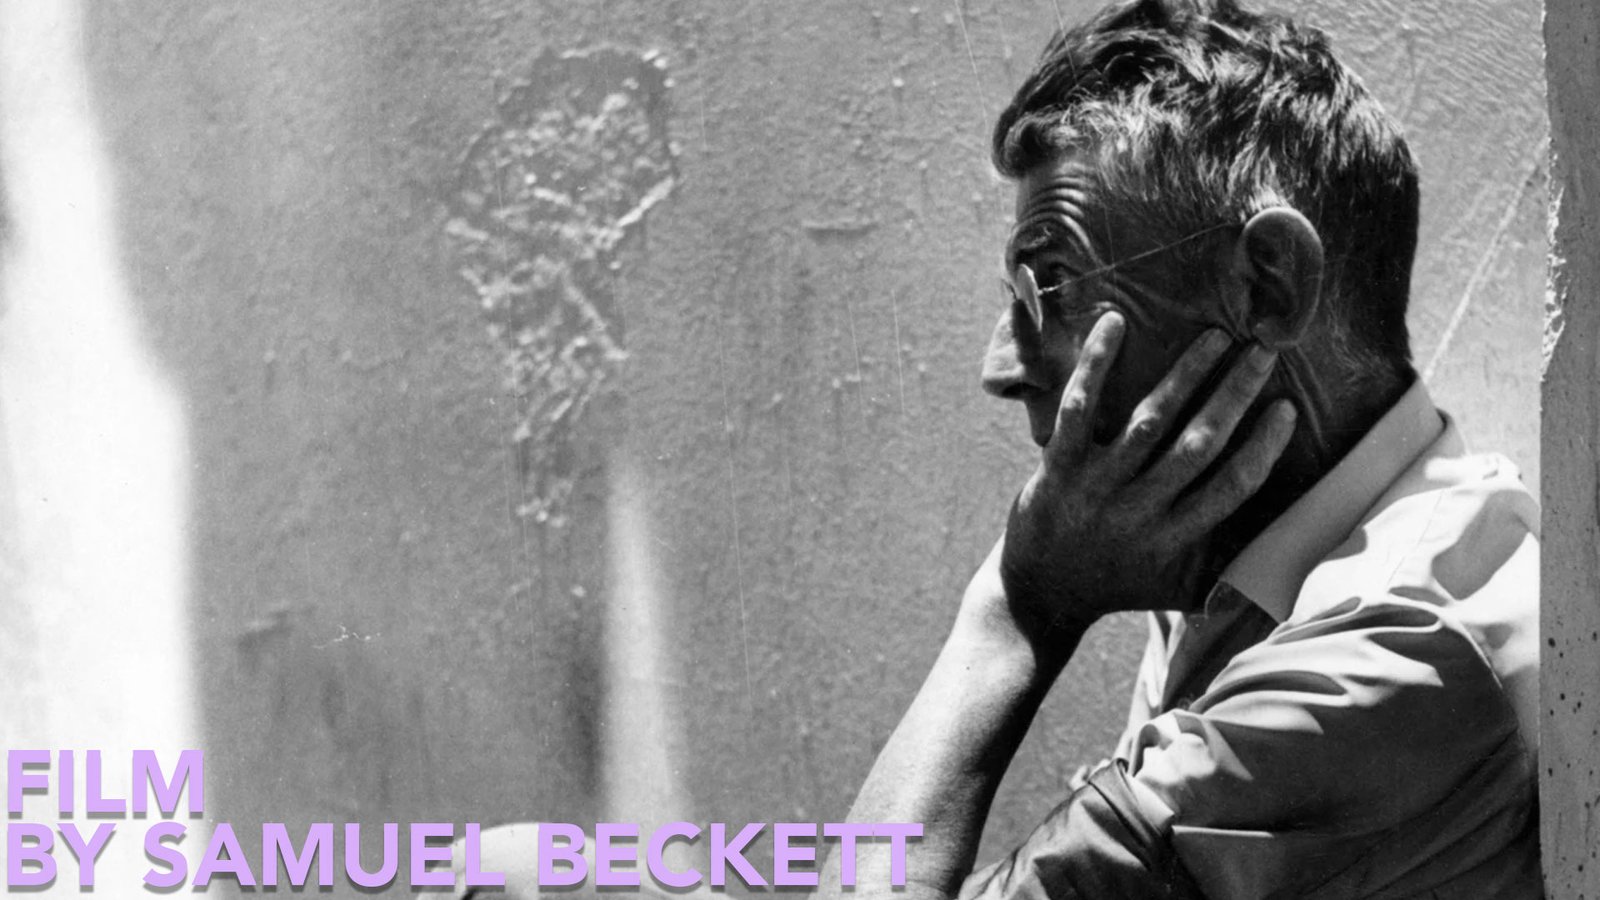 Film by Samuel Beckett